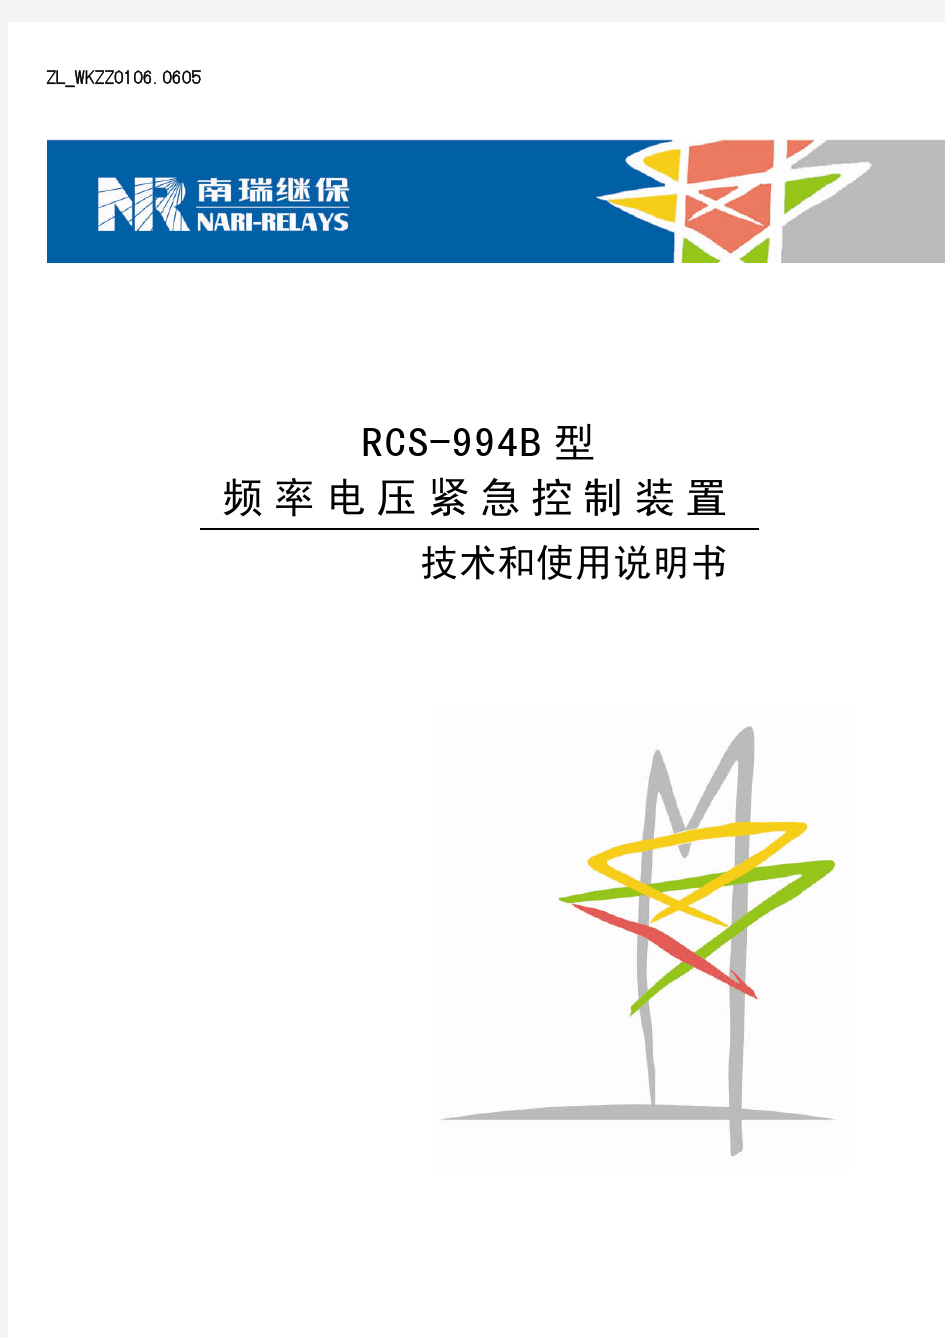 RCS-994B型频率电压紧急控制装置技术和使用说明书